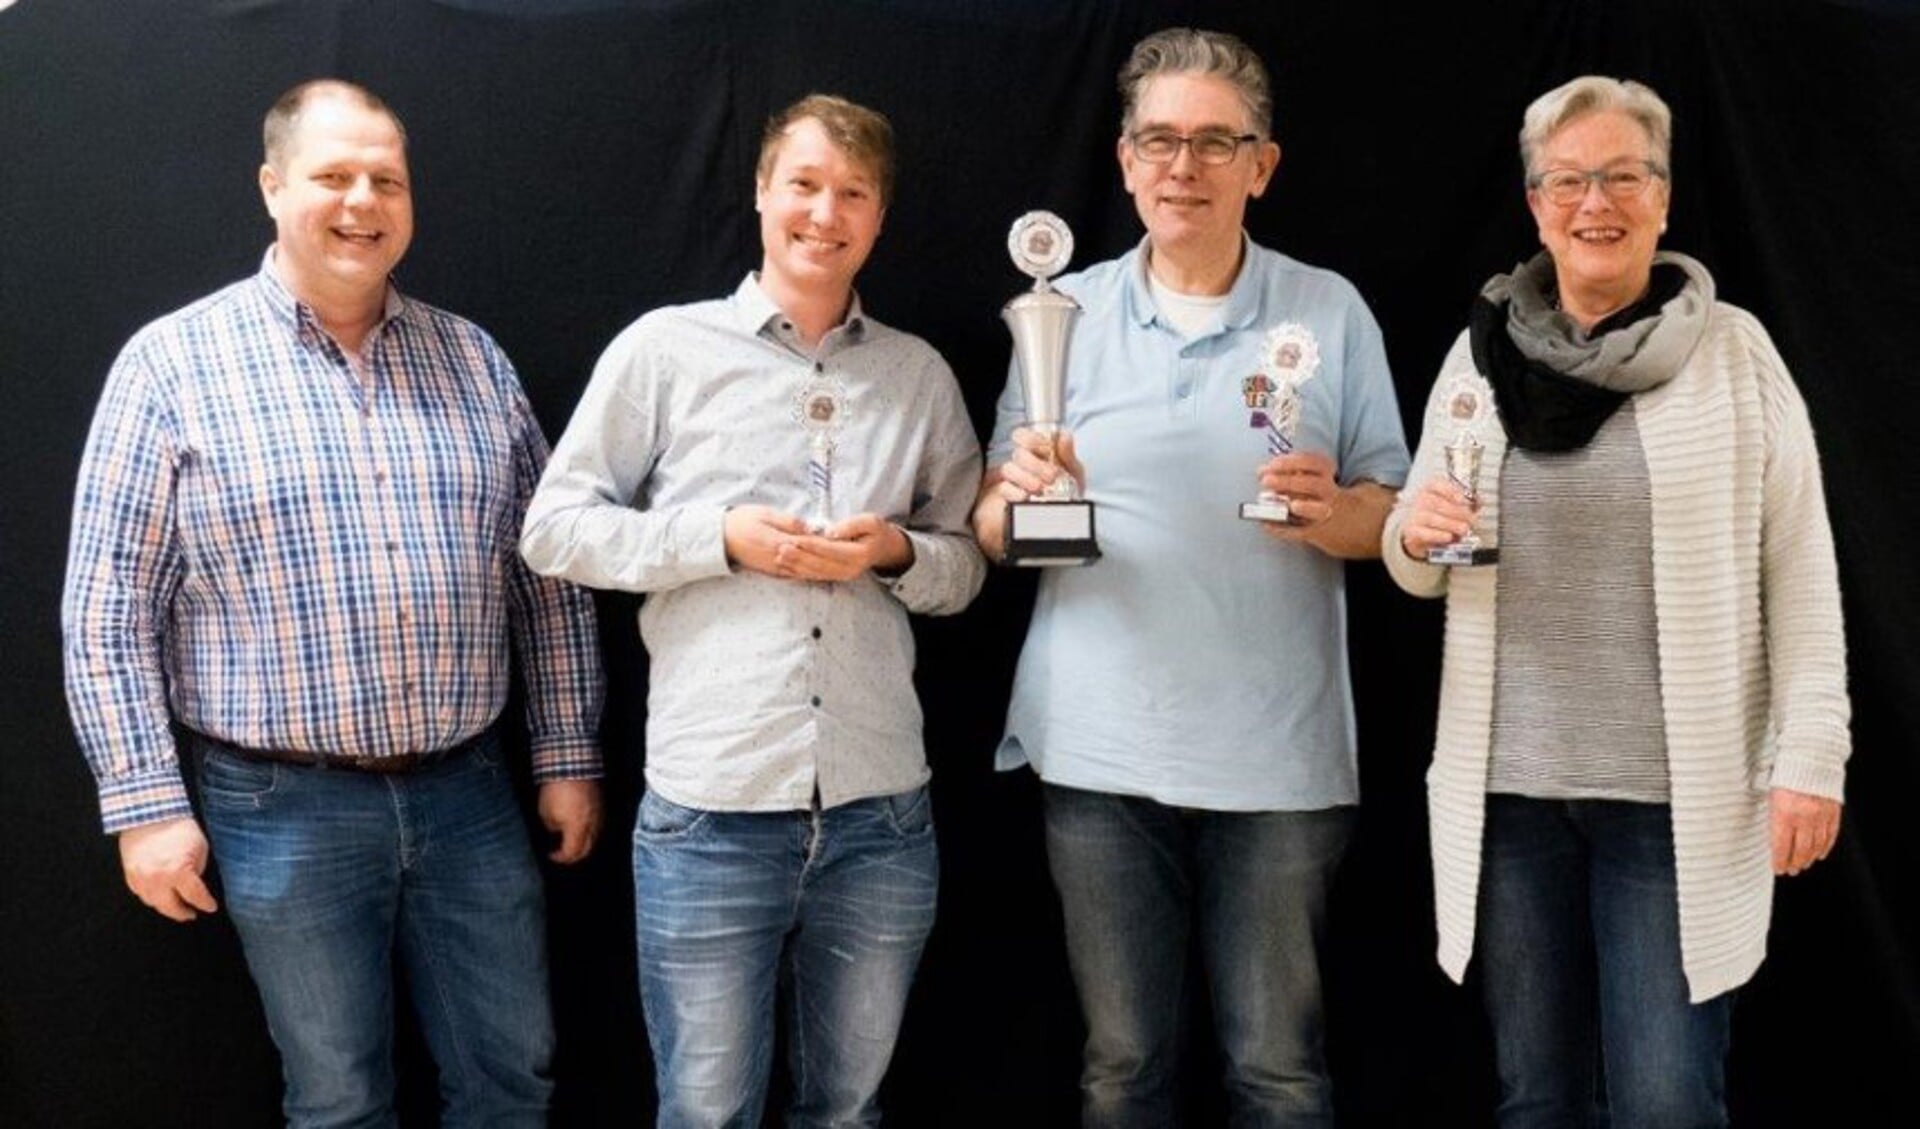 V.l.n.r. Rene Bos (bestuur Emergo), Dennis Poel (3e), Bas Harmse (Castricums Keezkampioen 2017) en Gerda Zwart (2e)

Foto door: Erna Lute